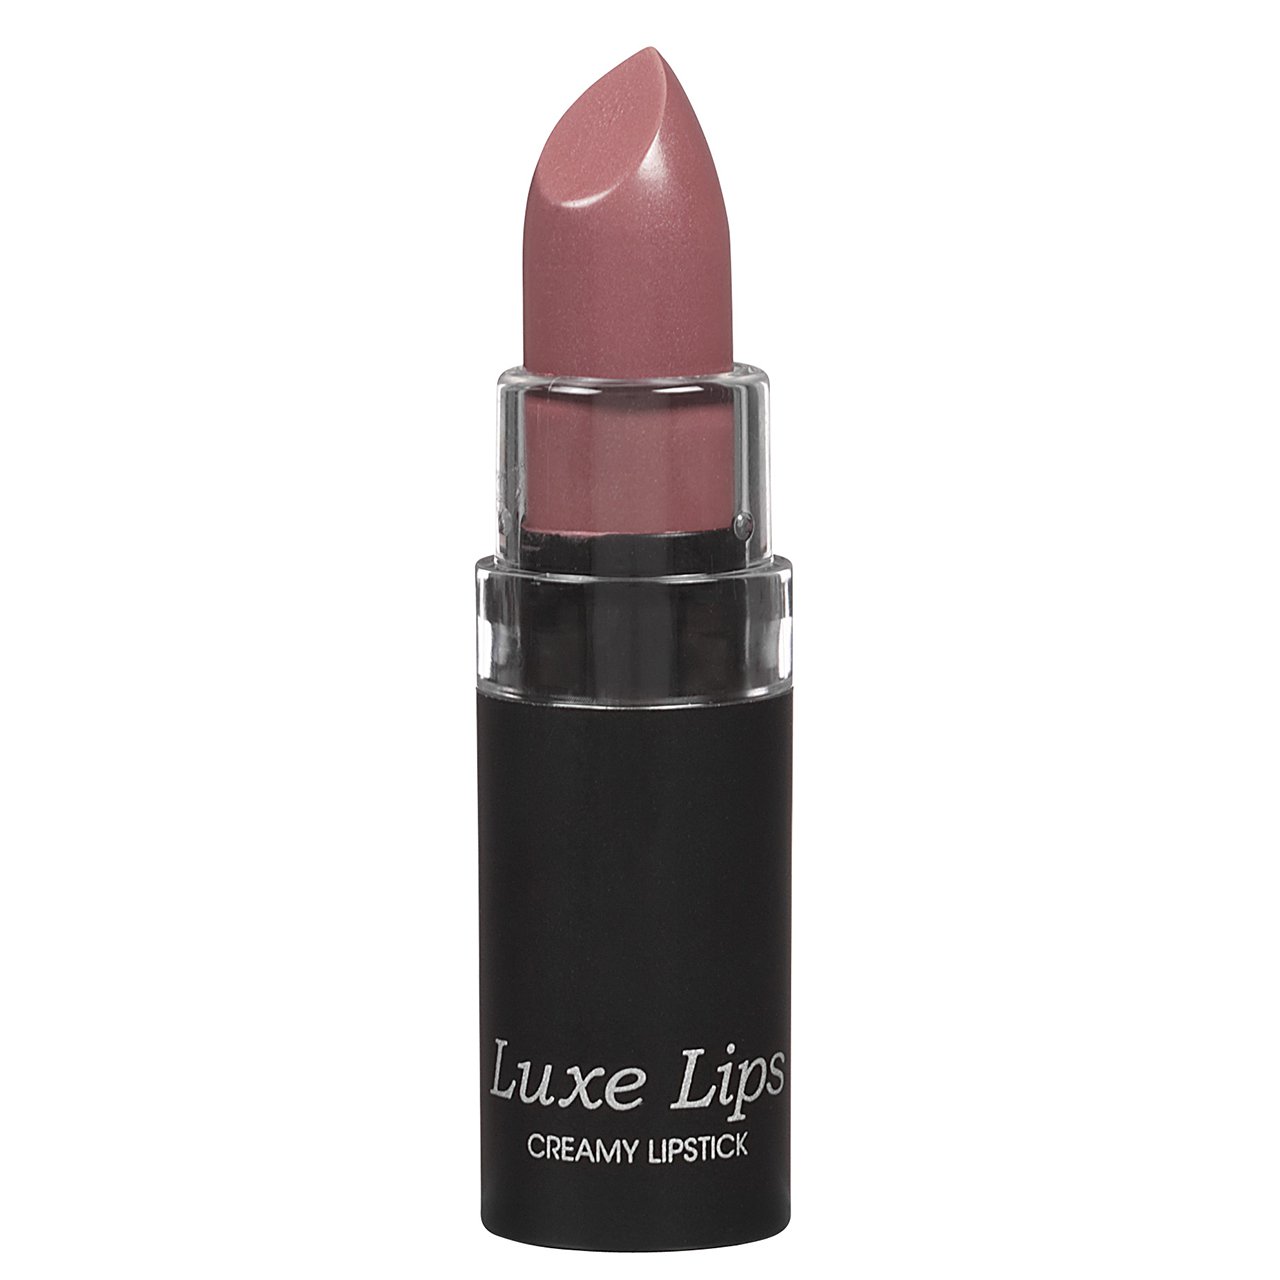 Styli-Style Luxe Lips Creamy Lipstick - Spiced Mauve